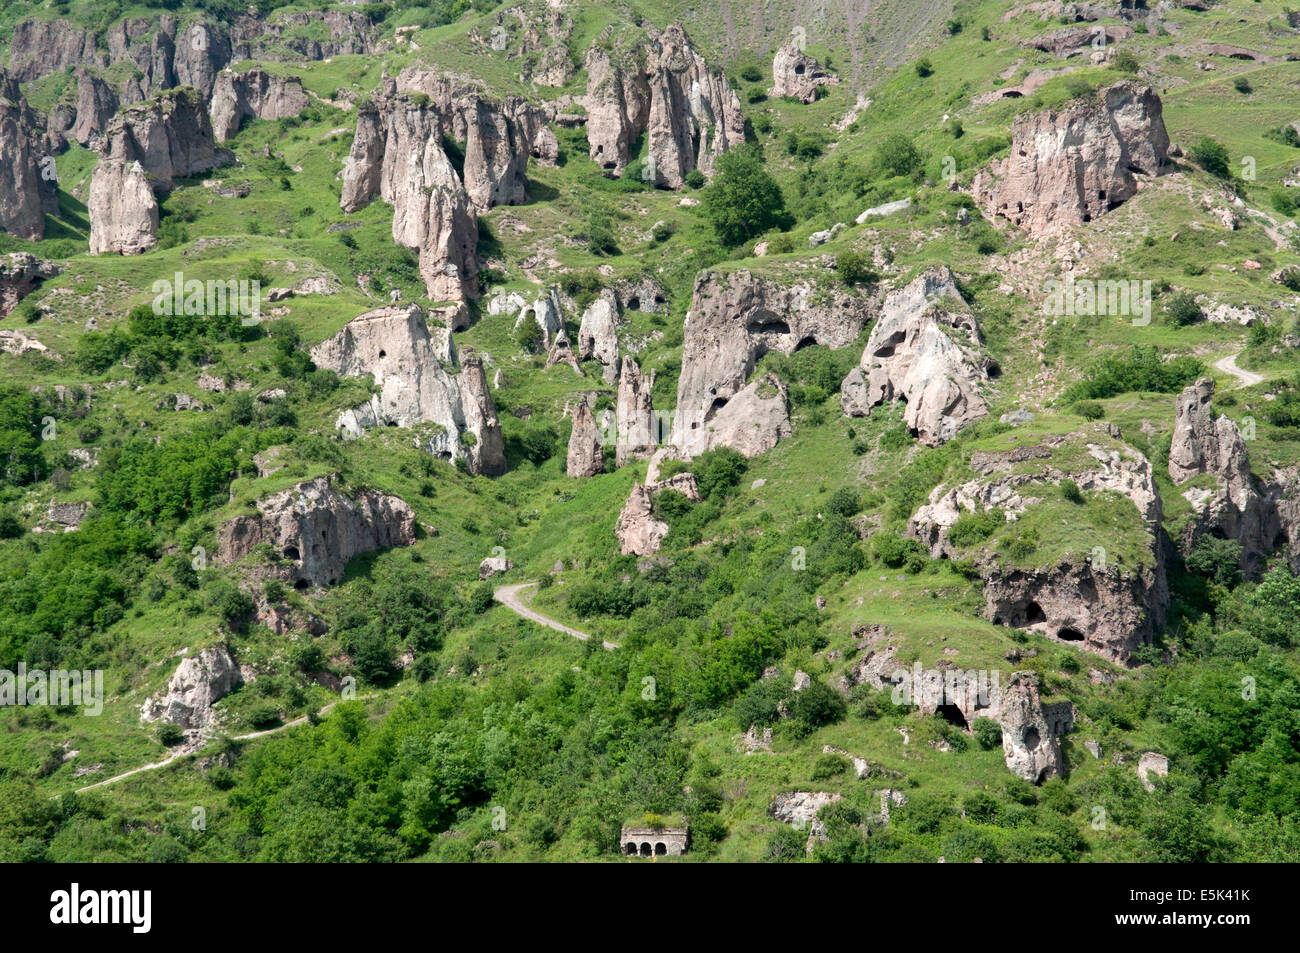 Cueva khndzoresk asentamiento, armenia Foto de stock